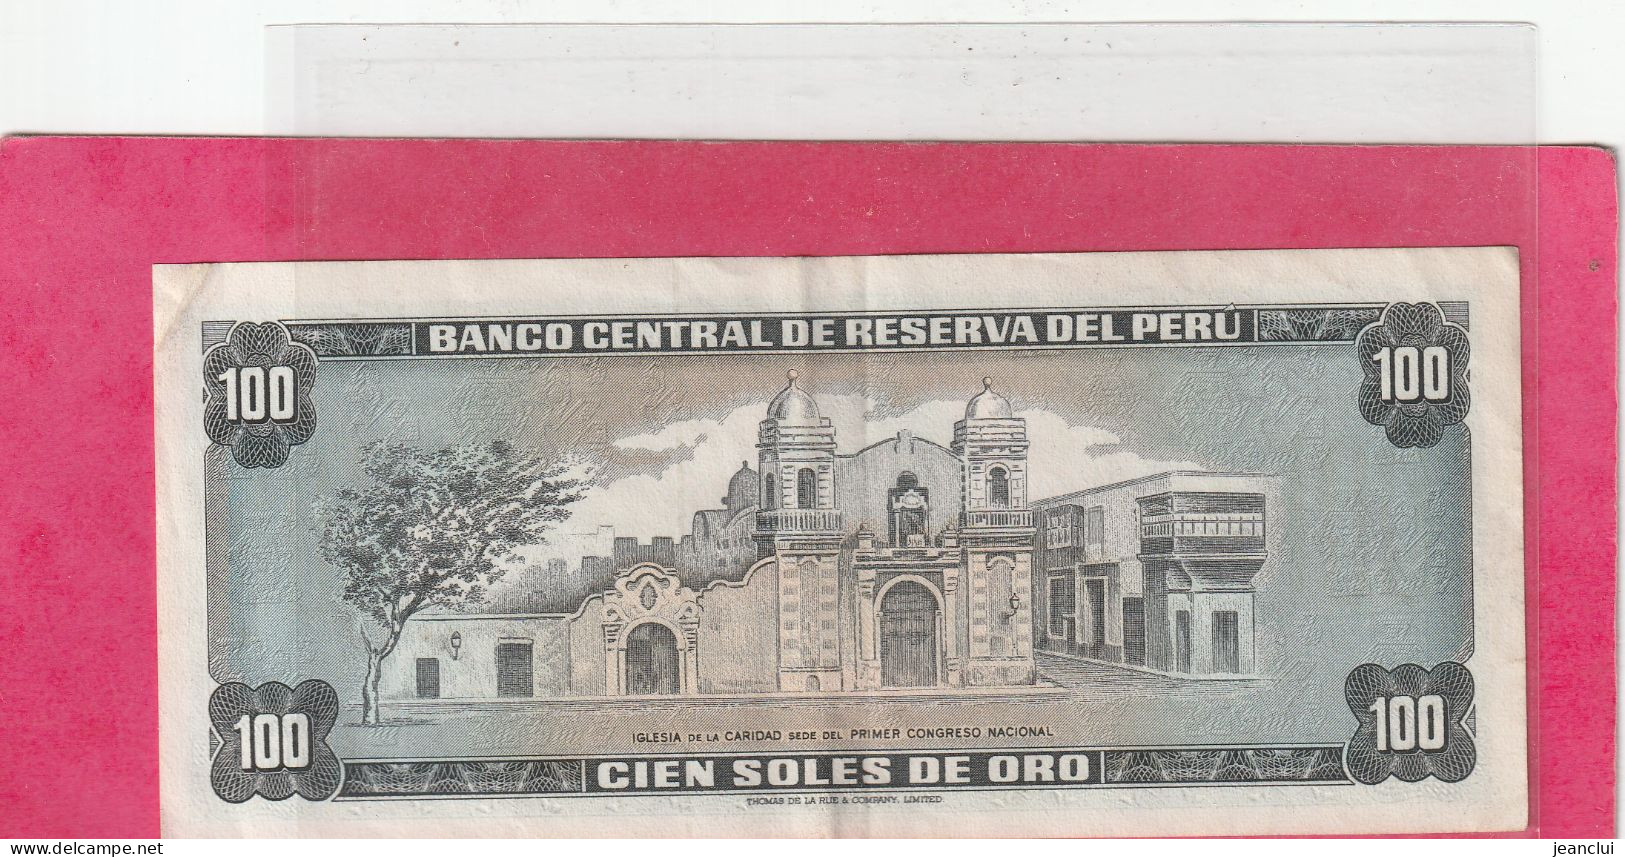 BANCO CENTRAL DE RESERVA DEL PERU .  100 SOLES DE ORO  .  16 DE MAYO DE 1974  . N°  G 121495 .  2 SCANNES  .  BEL ETAT - Perù